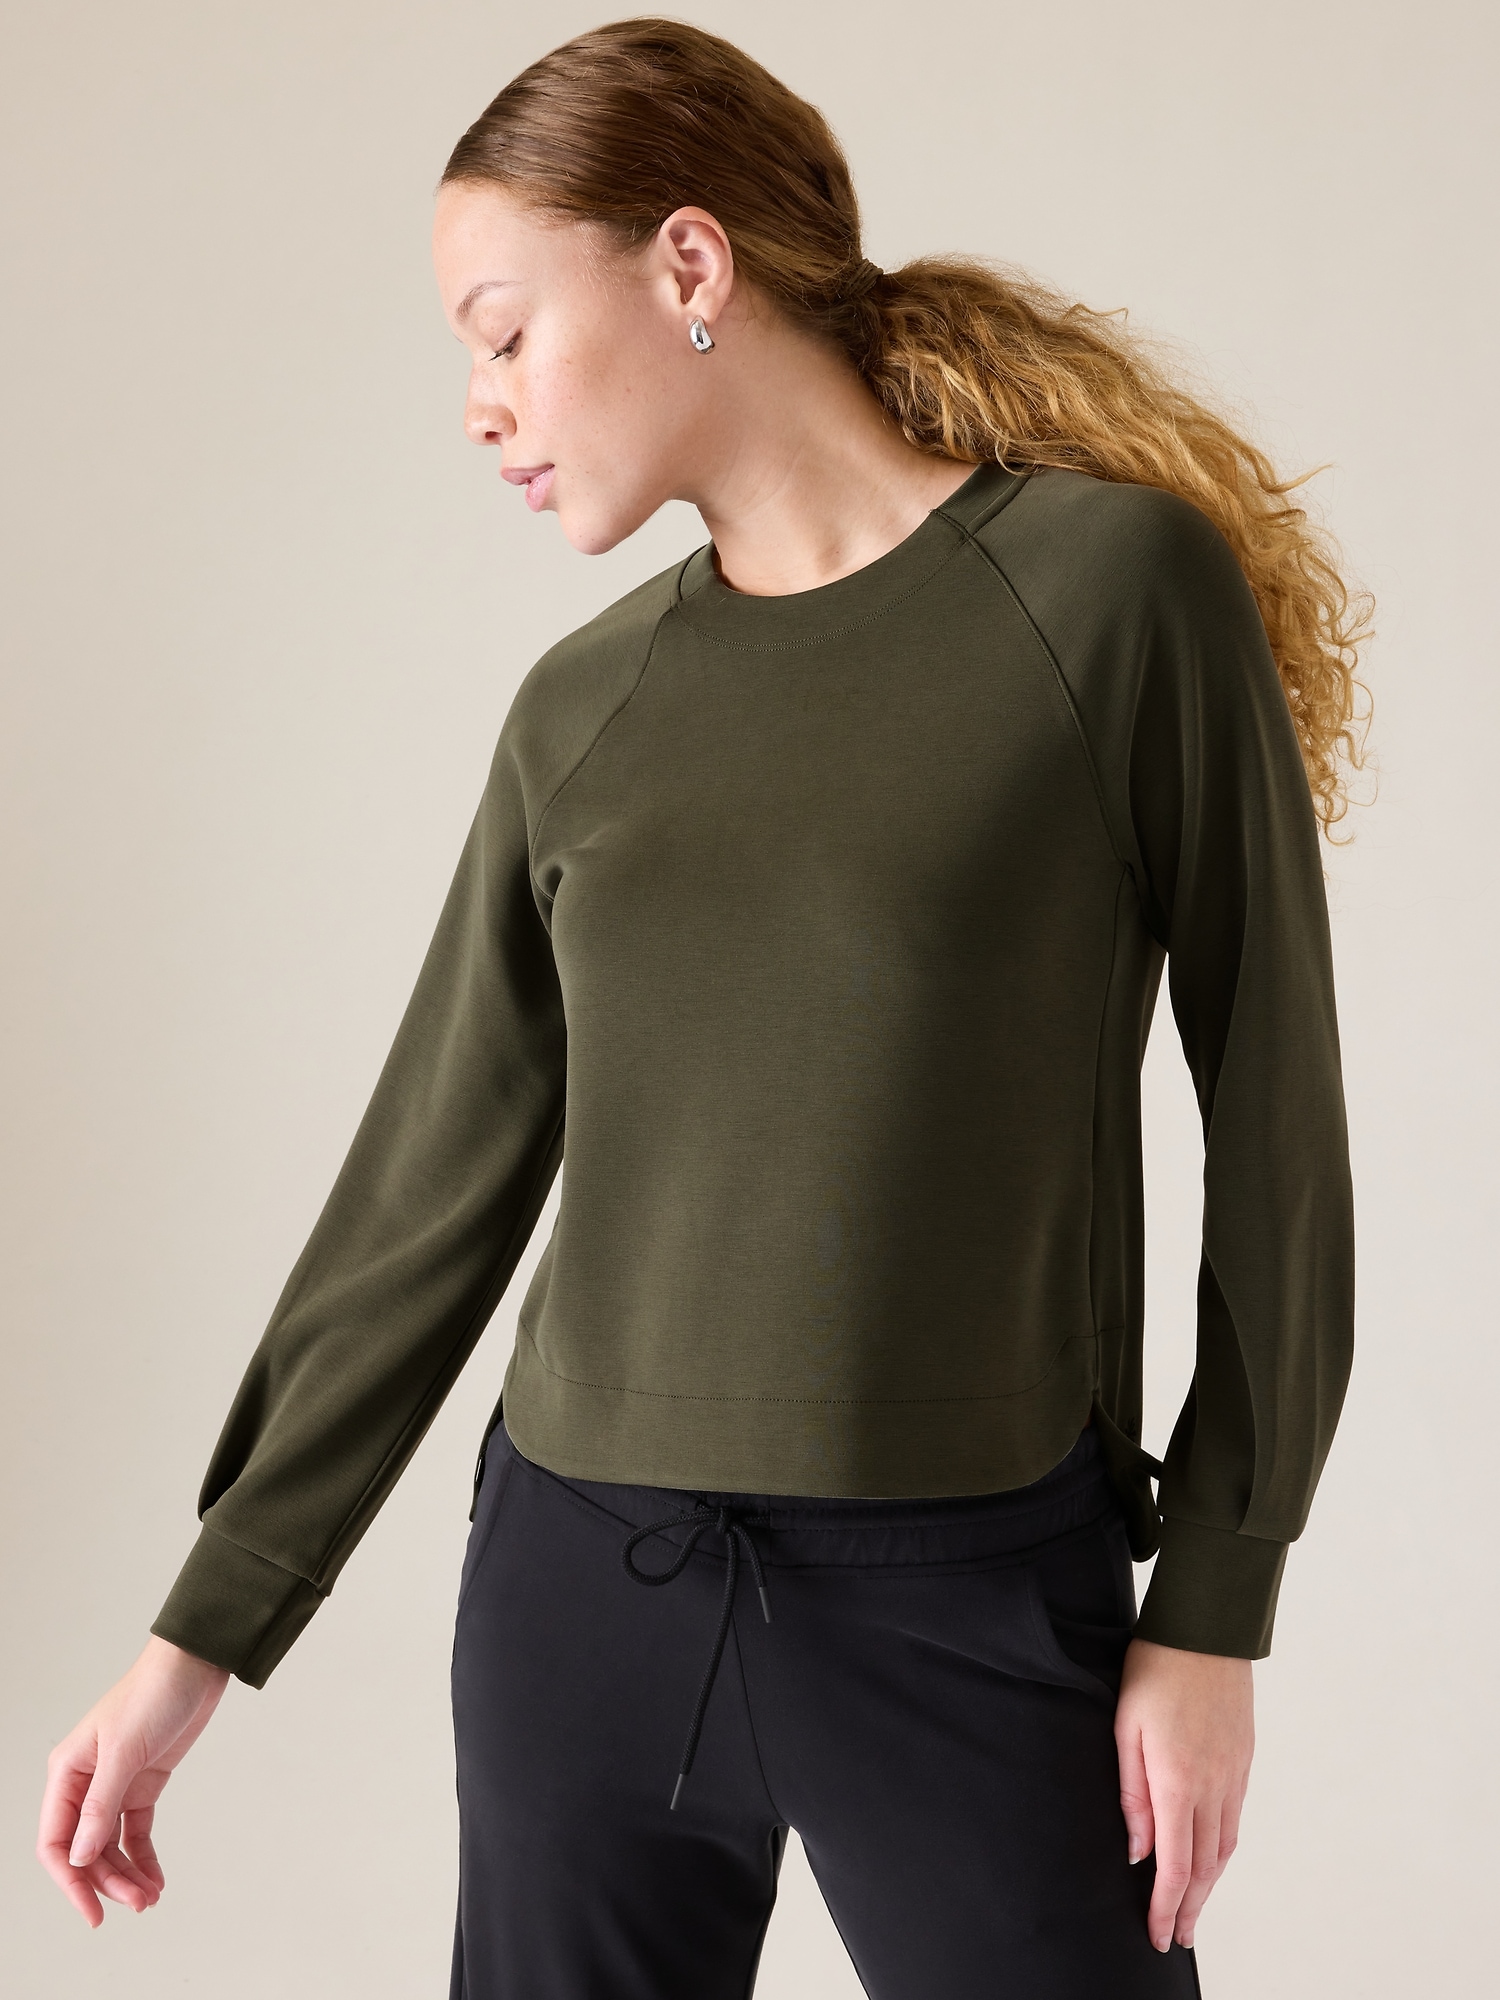 Athleta Women's Seasoft Crewneck Sweatshirt Plus Size 2x